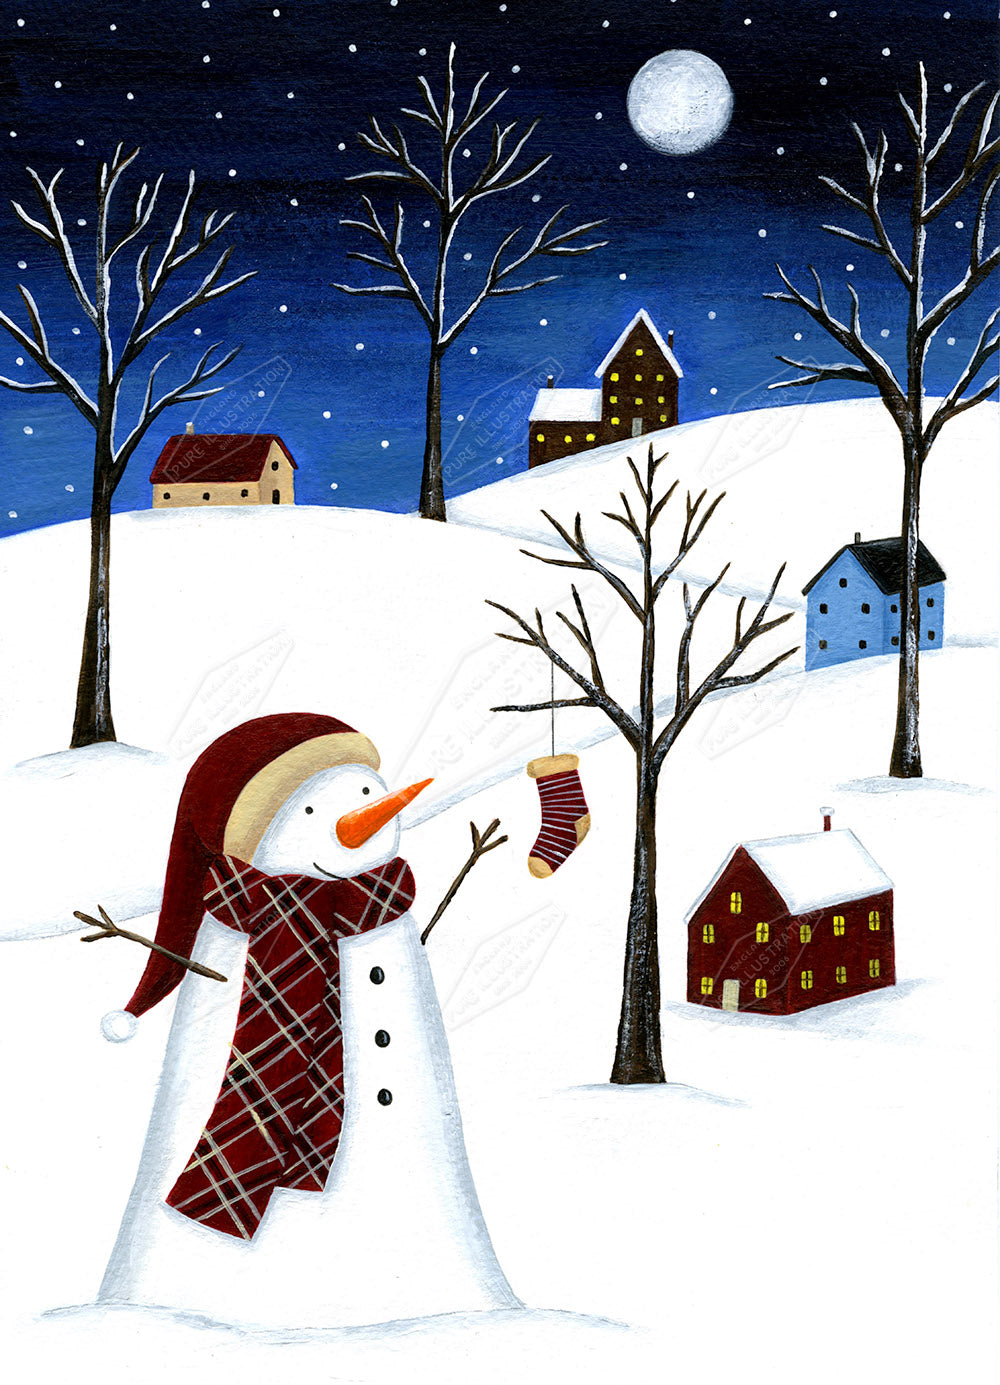 00026381AAI - Snowman Village Scene by Anna Aitken - Pure Art Licensing Agency